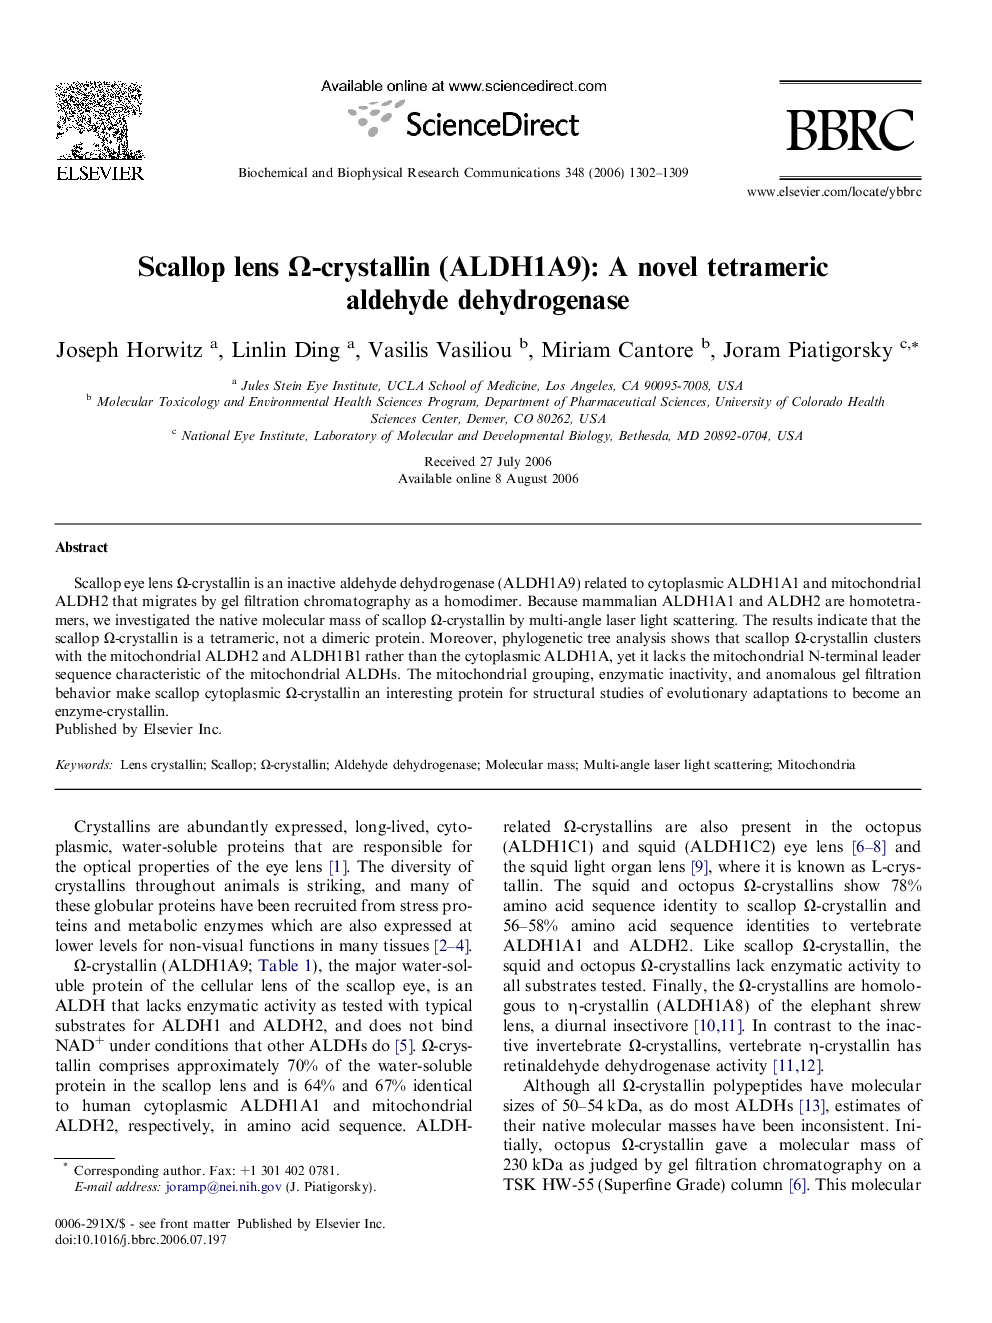 Scallop lens Ω-crystallin (ALDH1A9): A novel tetrameric aldehyde dehydrogenase